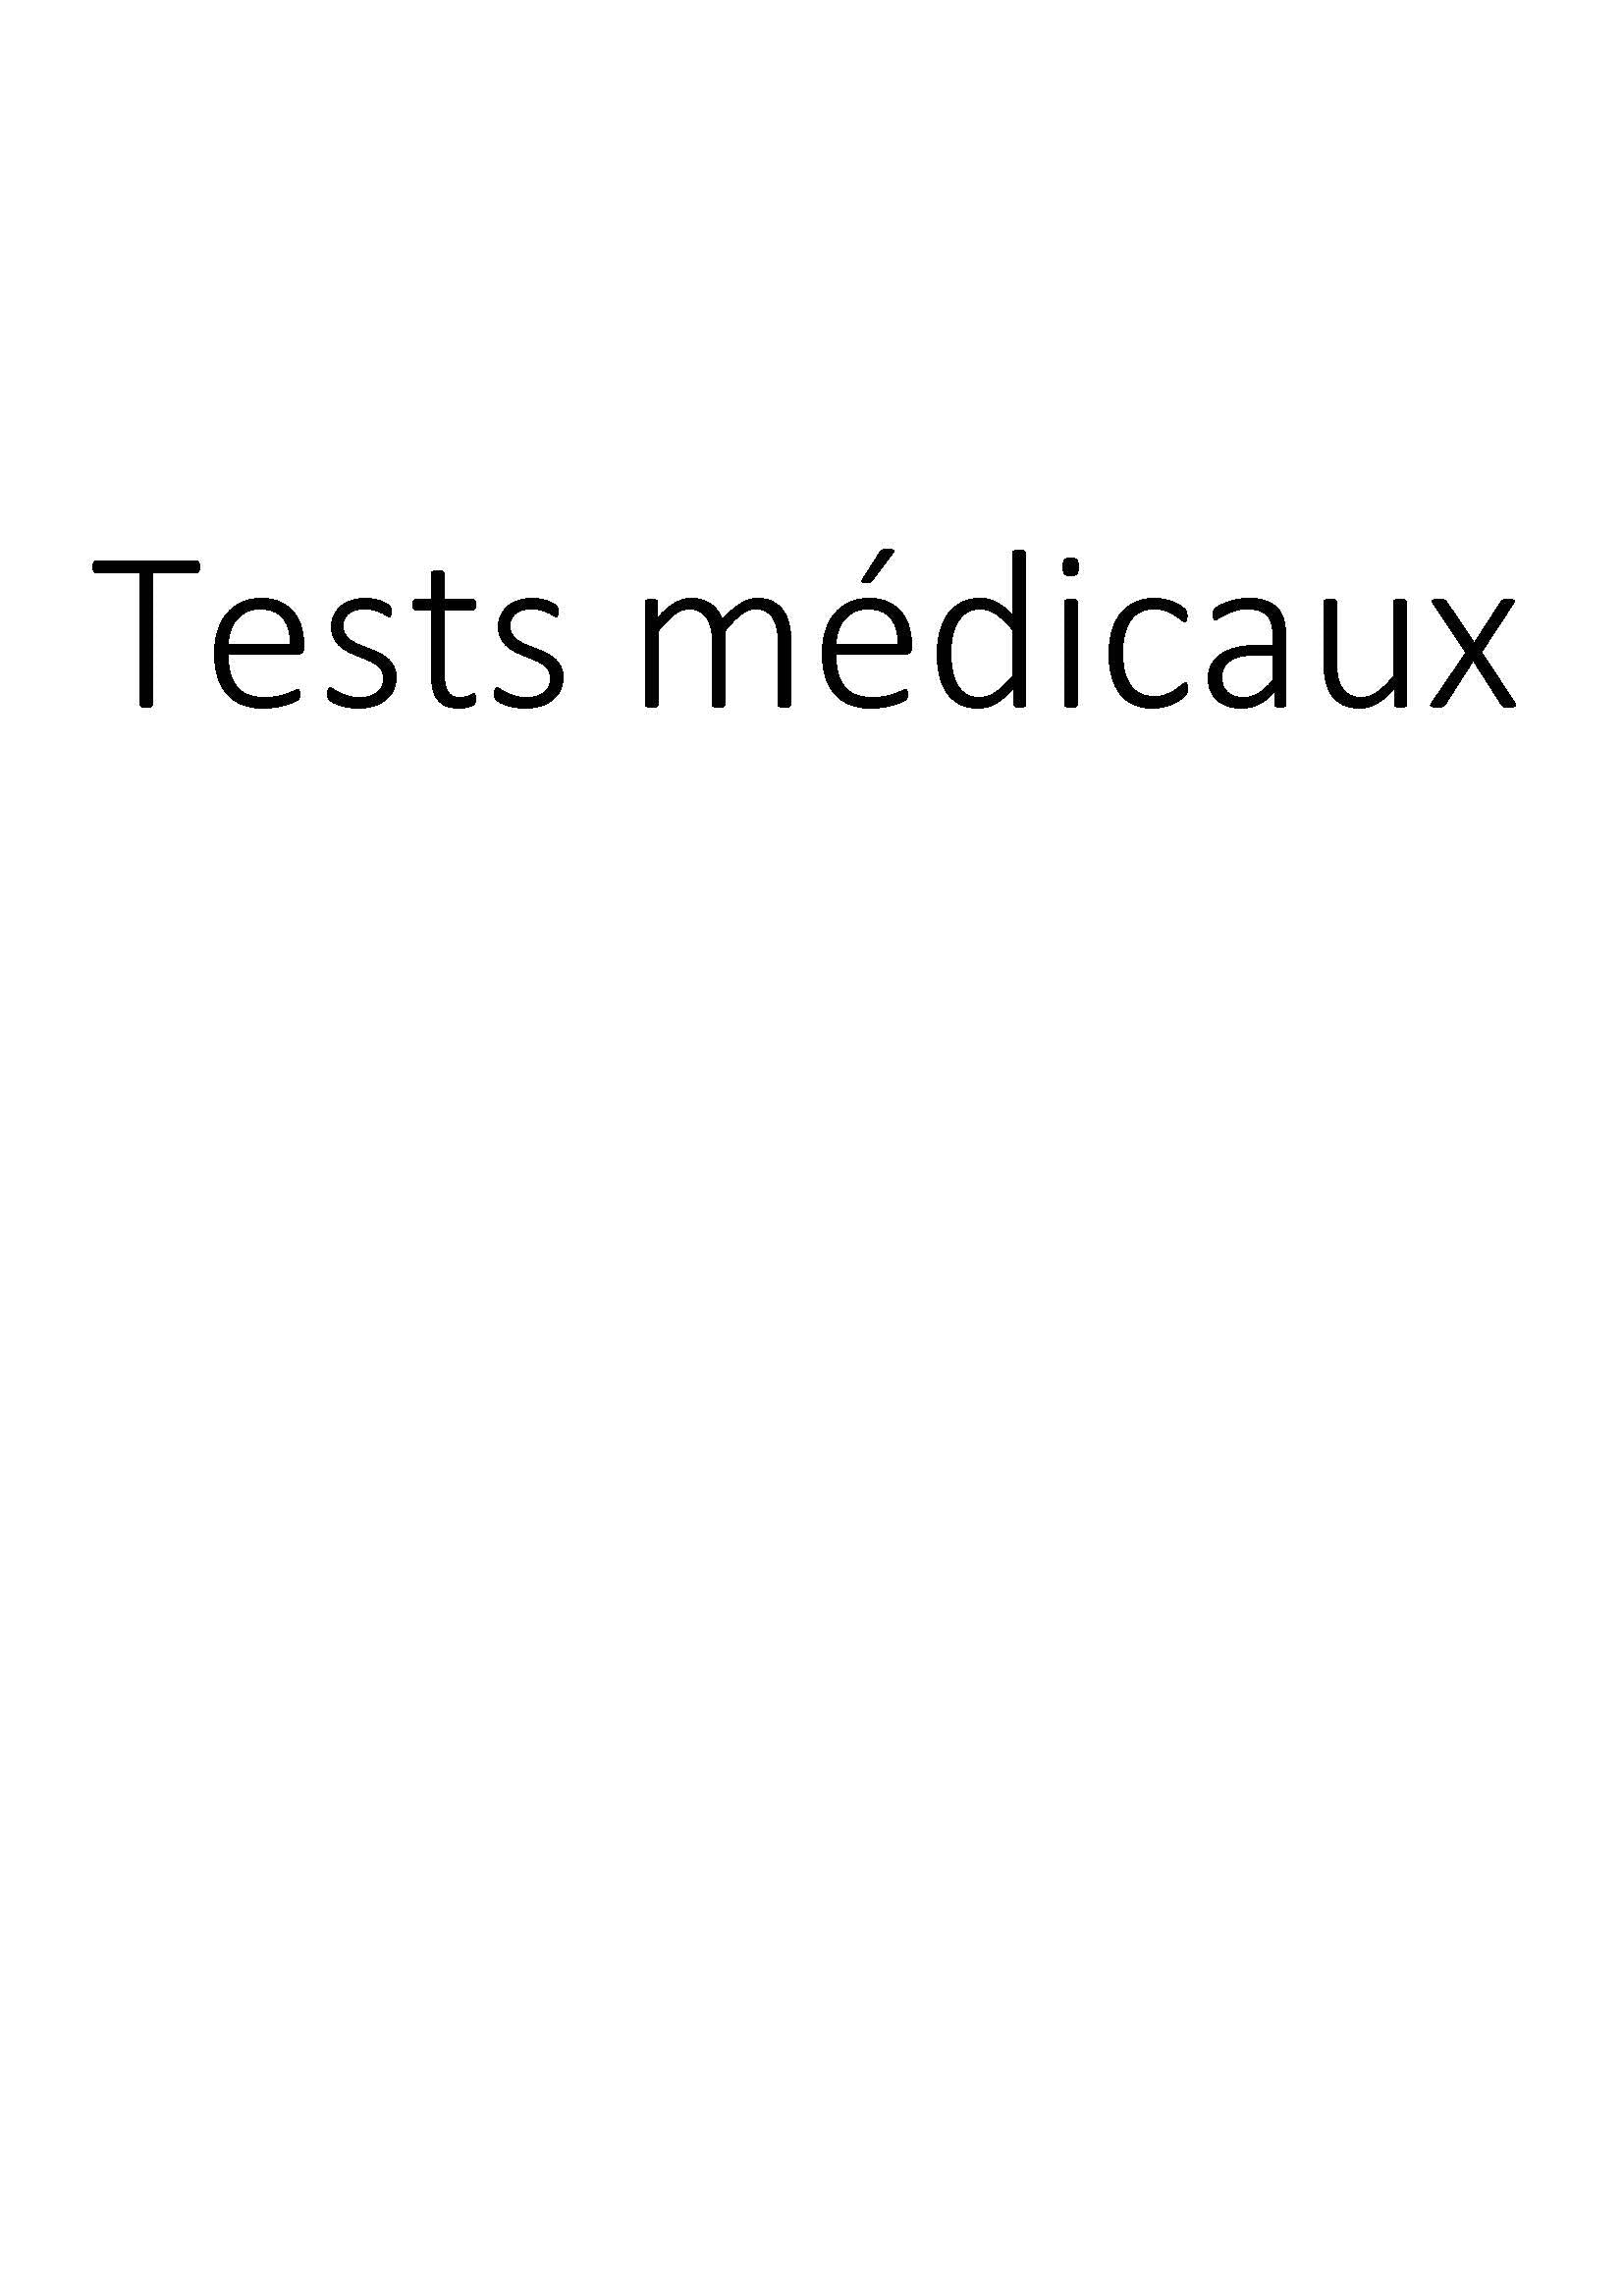 Tests médicaux clicktofournisseur.com